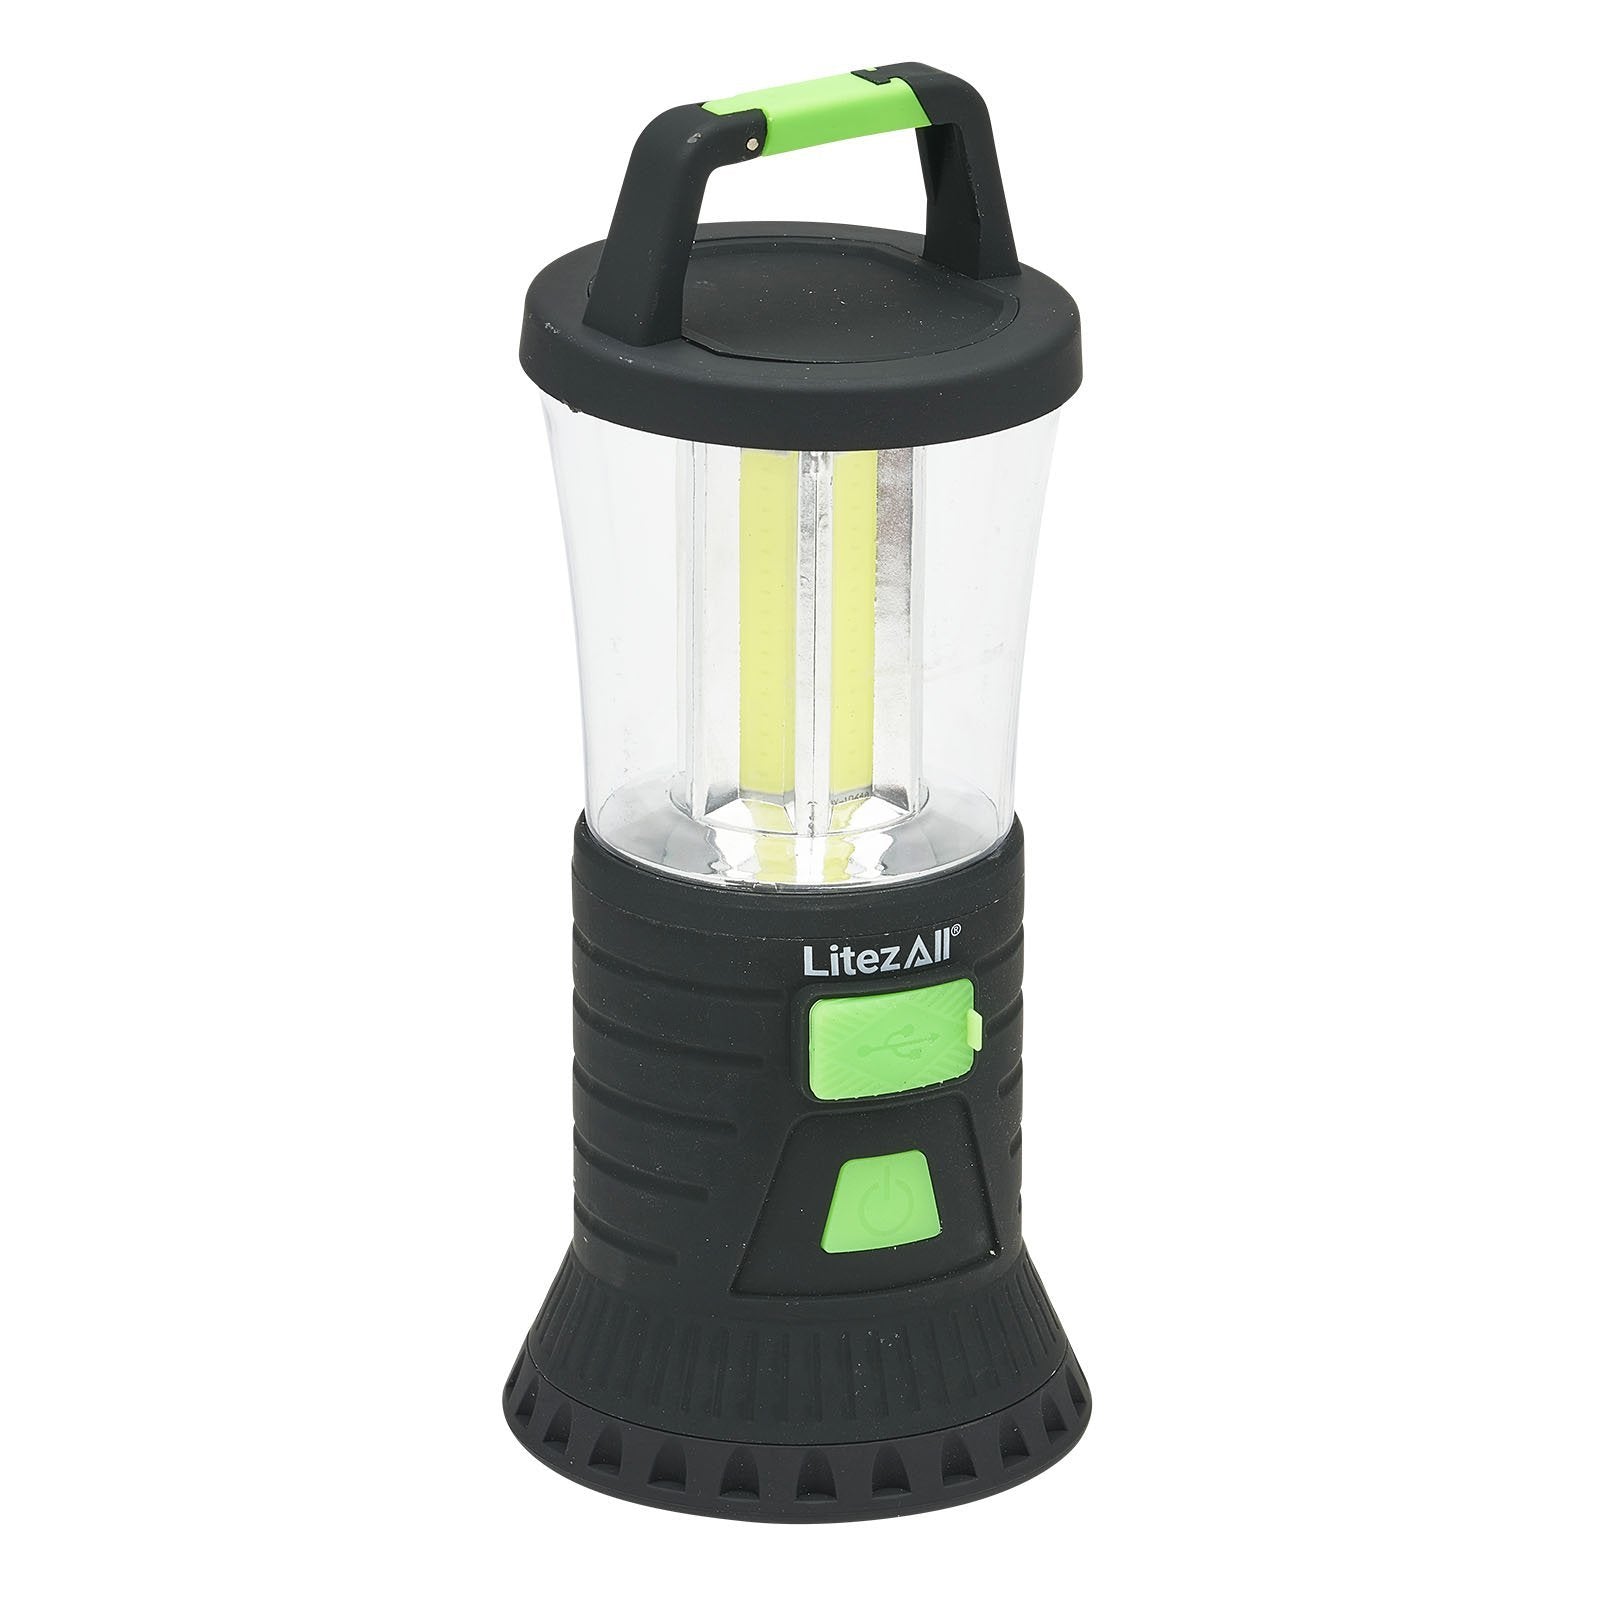 LitezAll Rechargeable 700 Lumen Lantern - LitezAll - Lanterns - 8